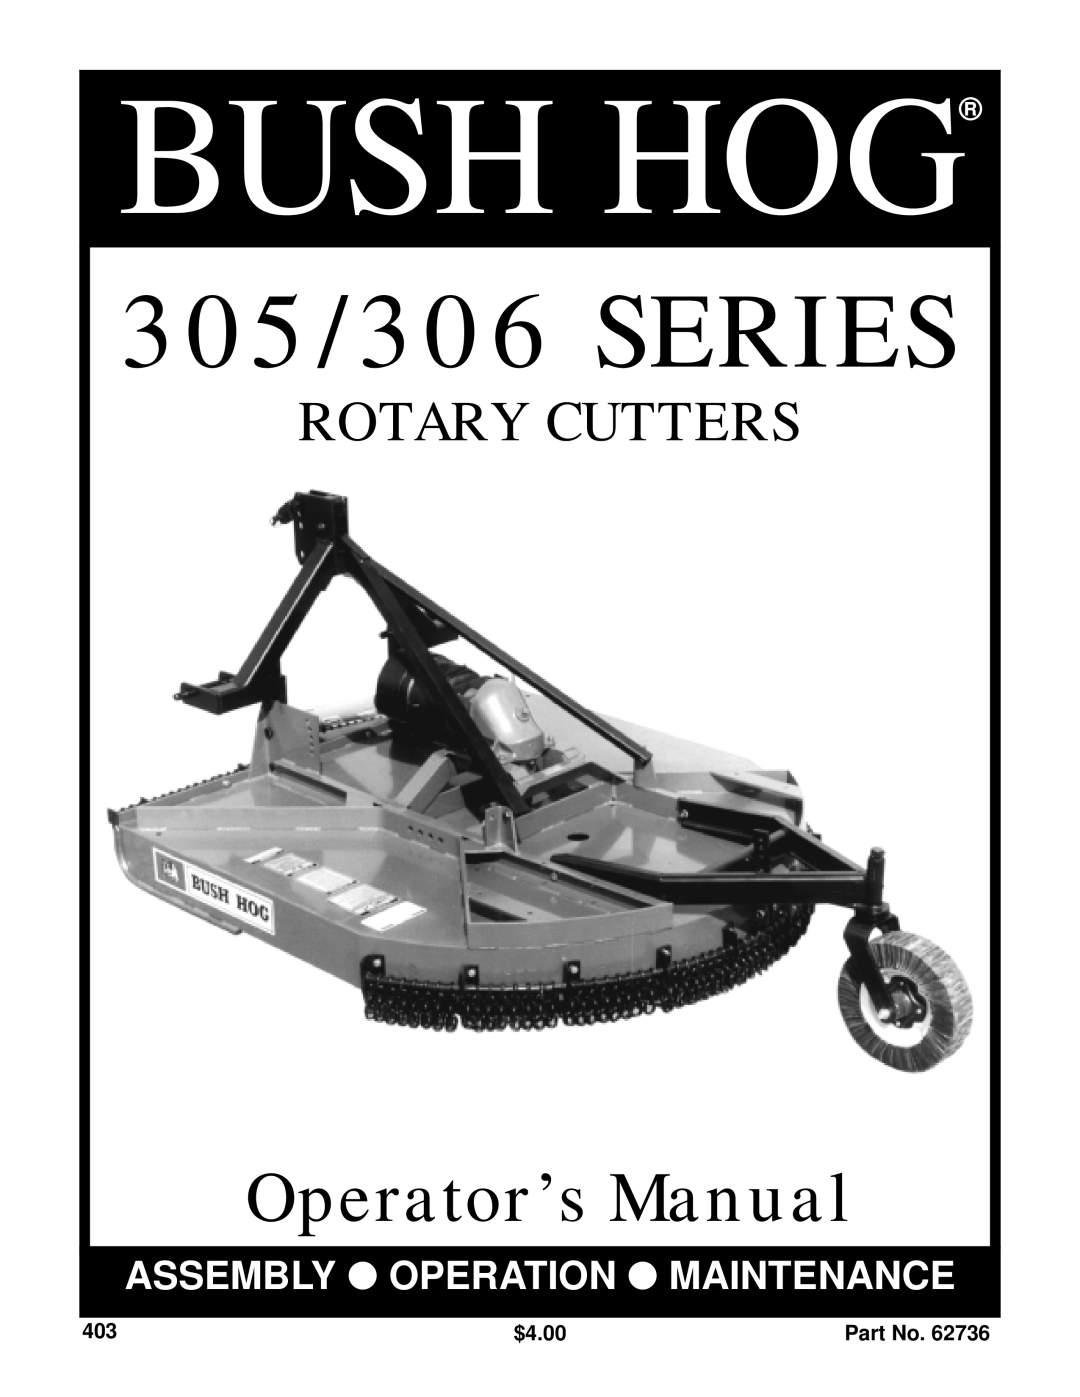 Bush Hog manual $4.00, Bush Hog, 305/306 SERIES, Operator’s Manual, Rotary Cutters, Assembly, Operation, Maintenance 